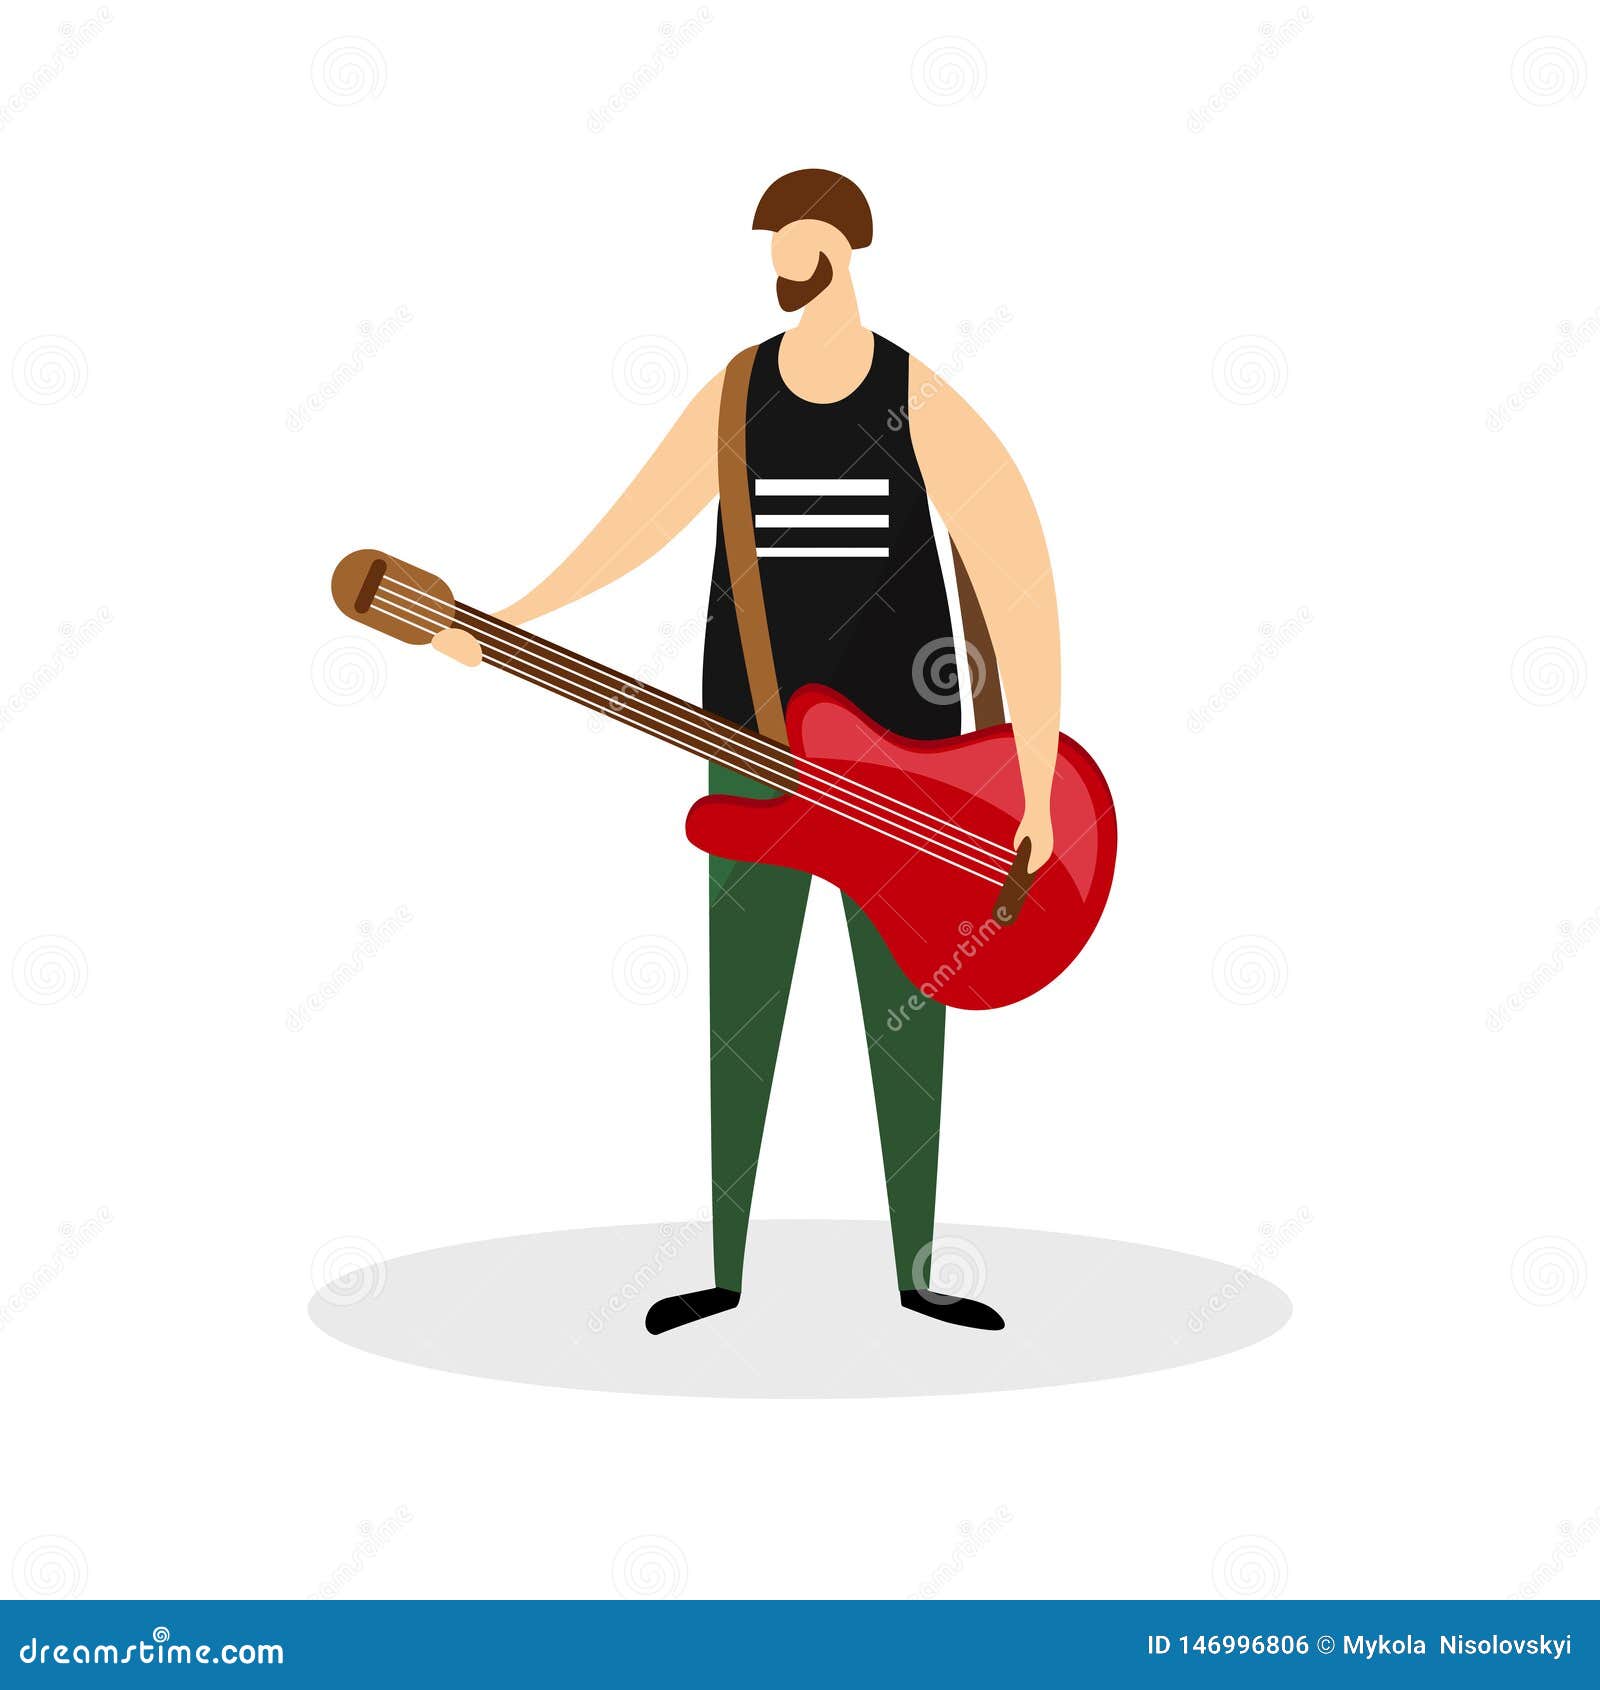 male rock musician character, guitarist, virtuoso.